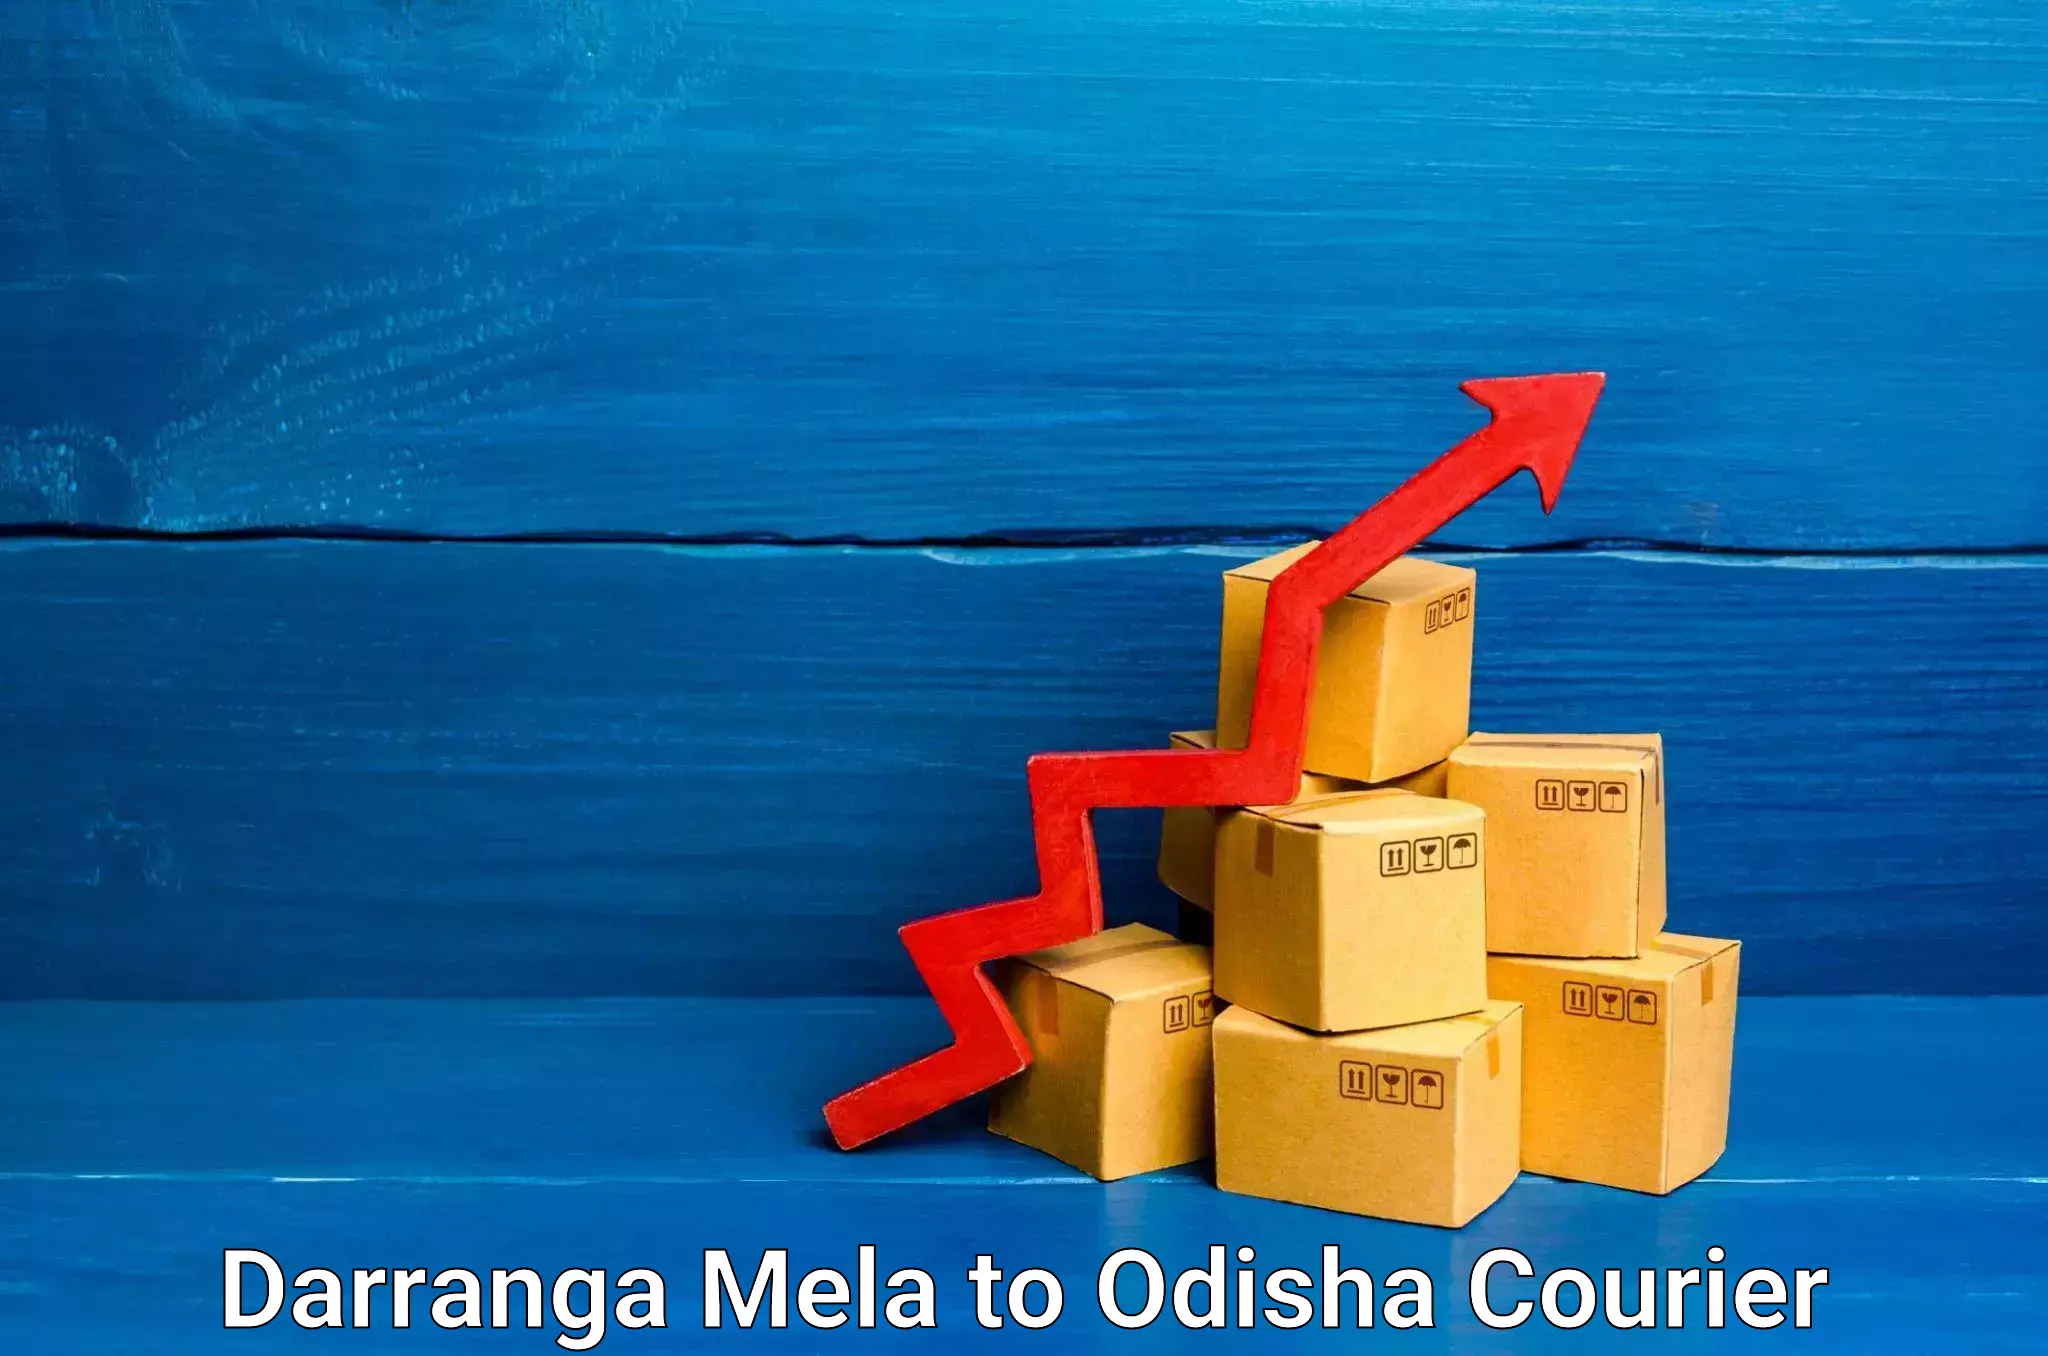 Reliable delivery network Darranga Mela to Bhadrak